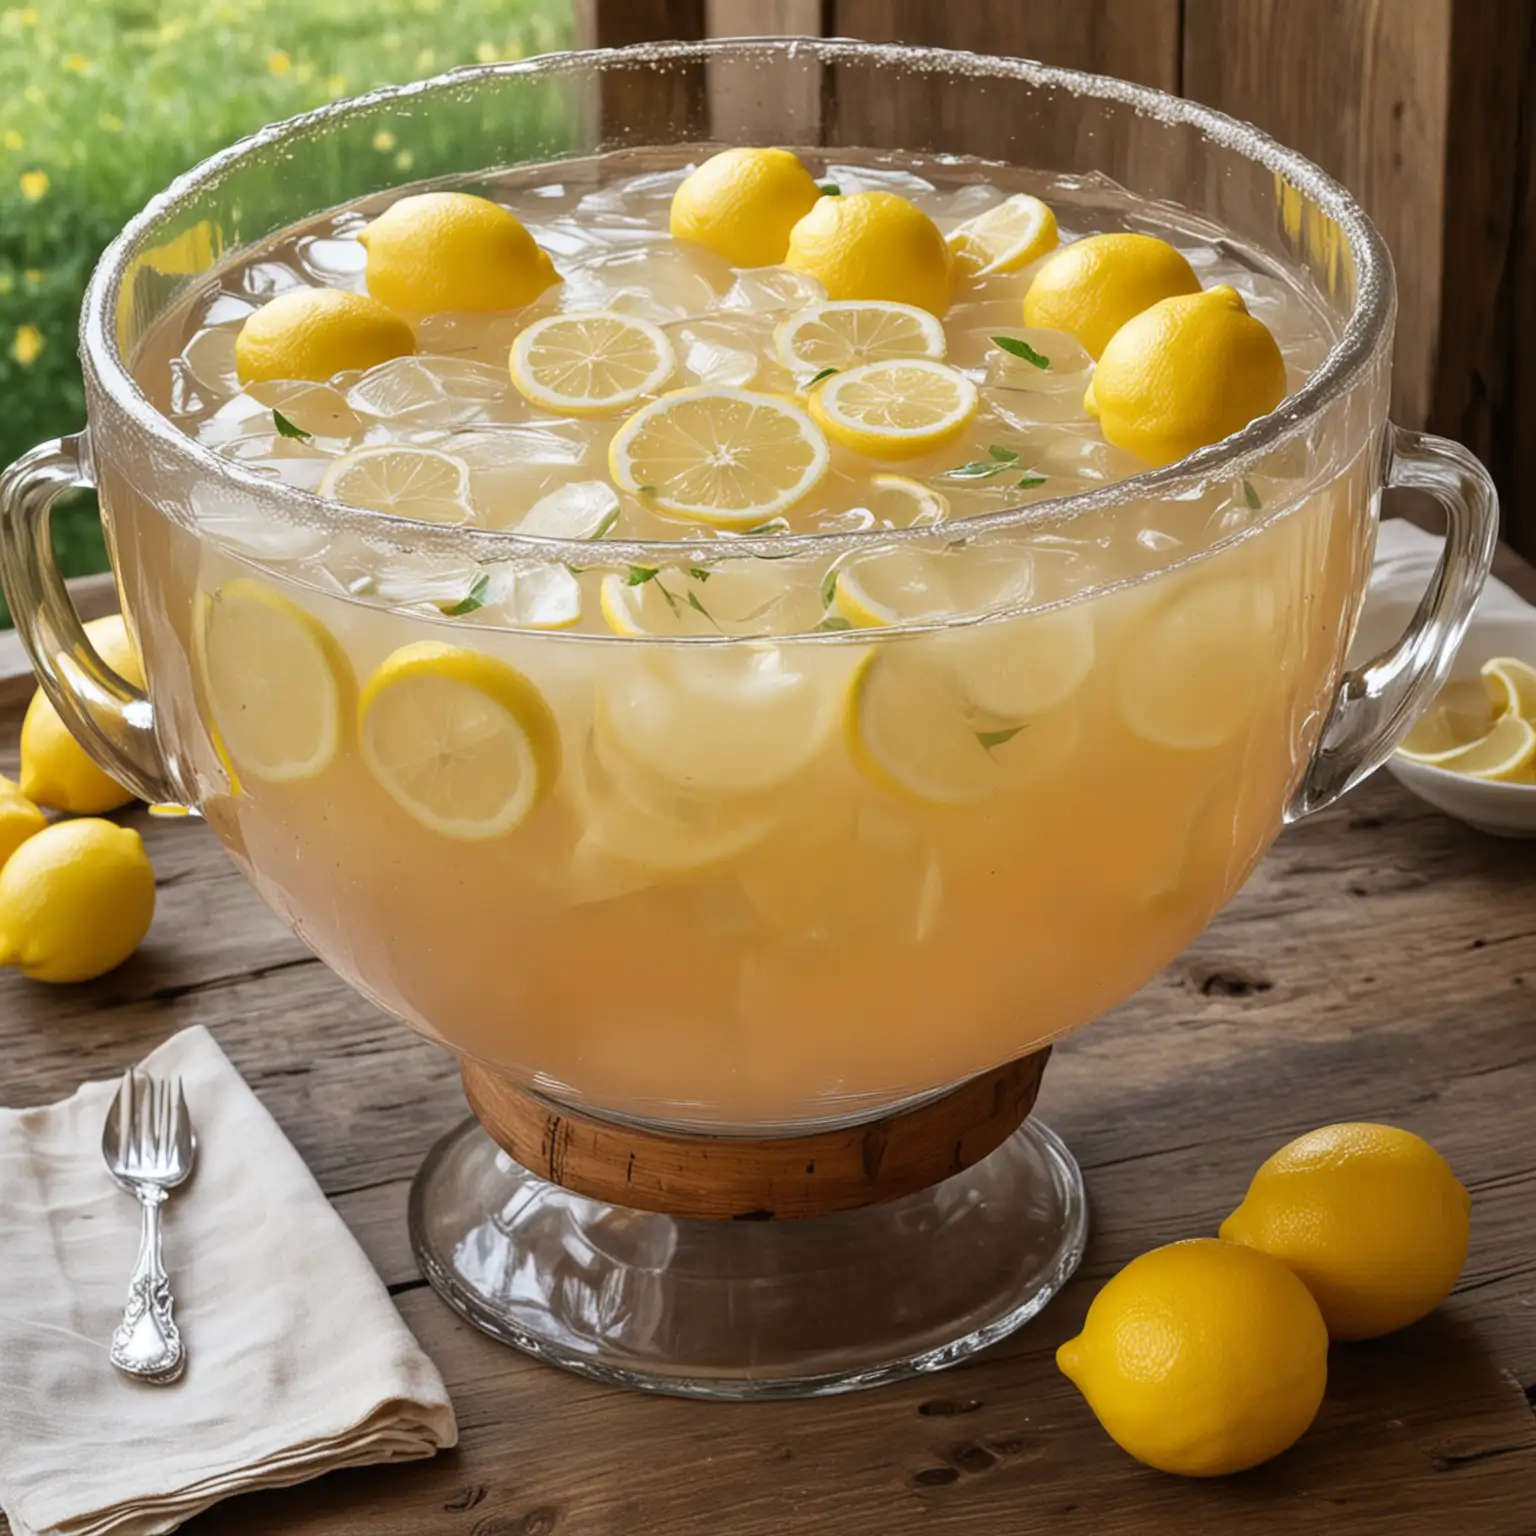 Rustic-Punch-Bowl-with-Lemonade-and-Fresh-Lemons